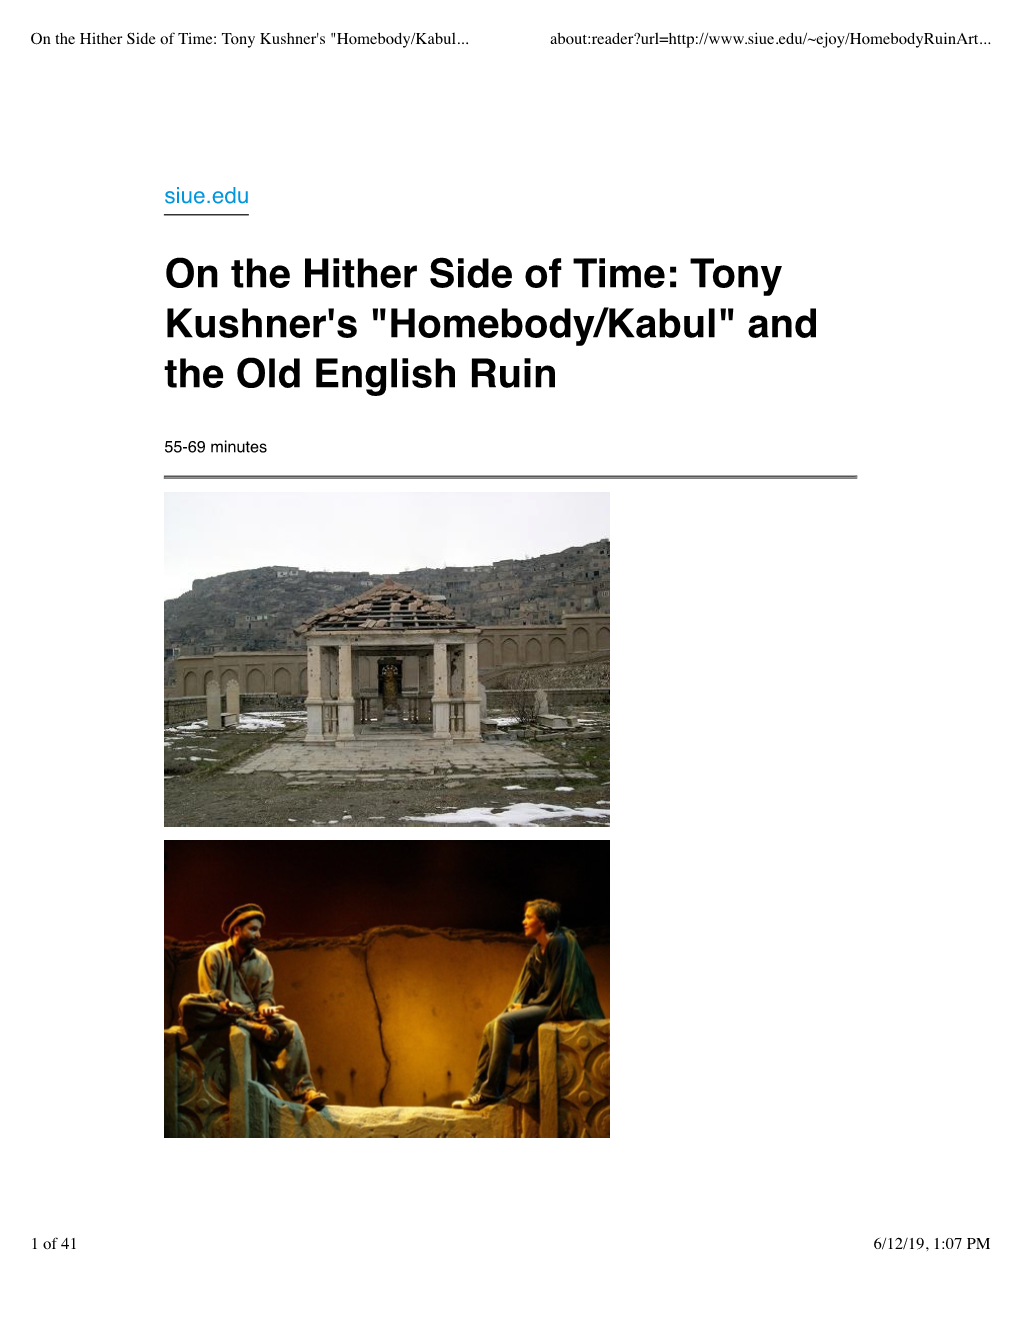 Tony Kushner's "Homebody/Kabul